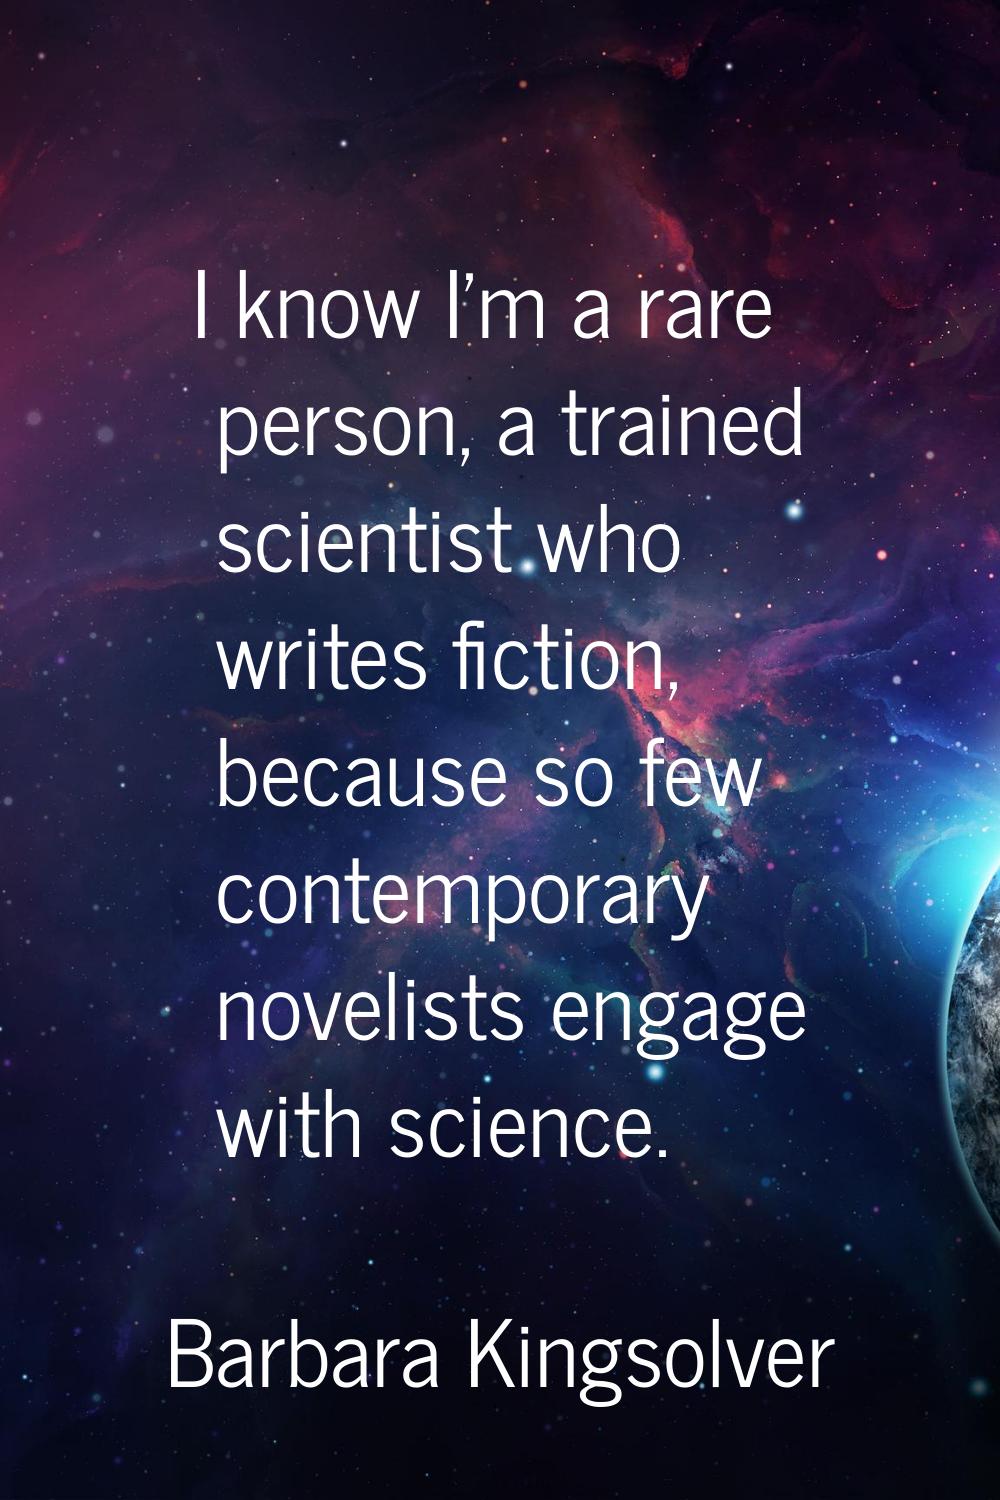 I know I'm a rare person, a trained scientist who writes fiction, because so few contemporary novel